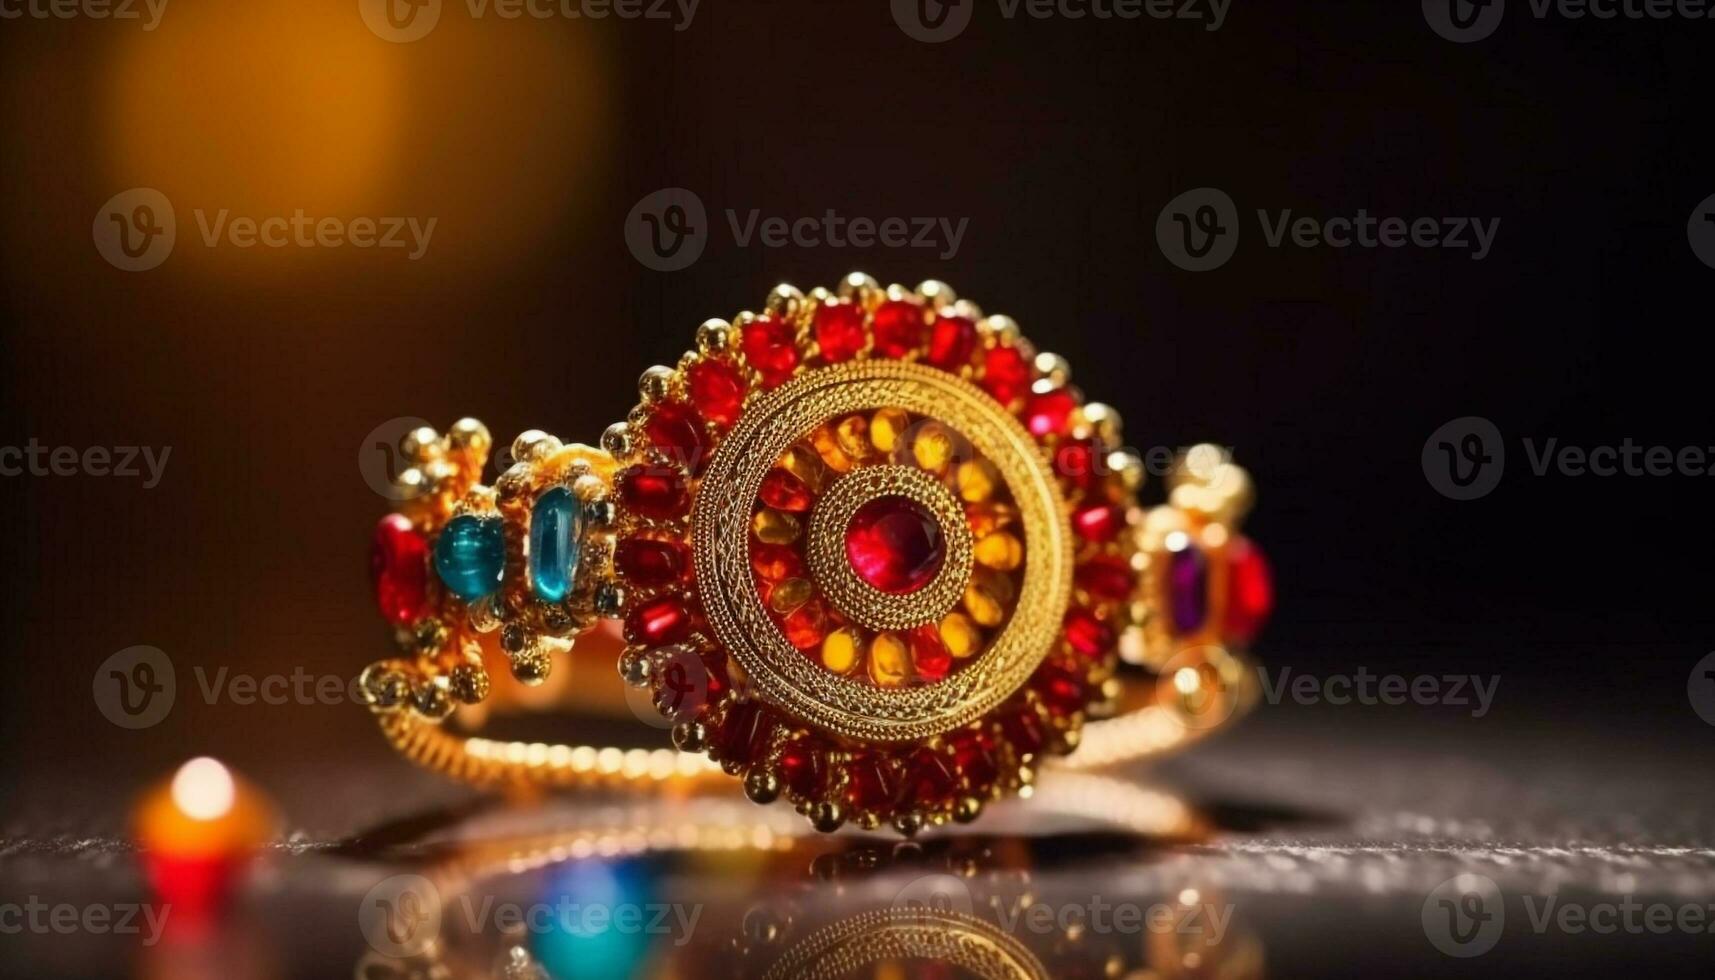 Shiny gold jewelry adorns bride ornate wrist generated by AI photo